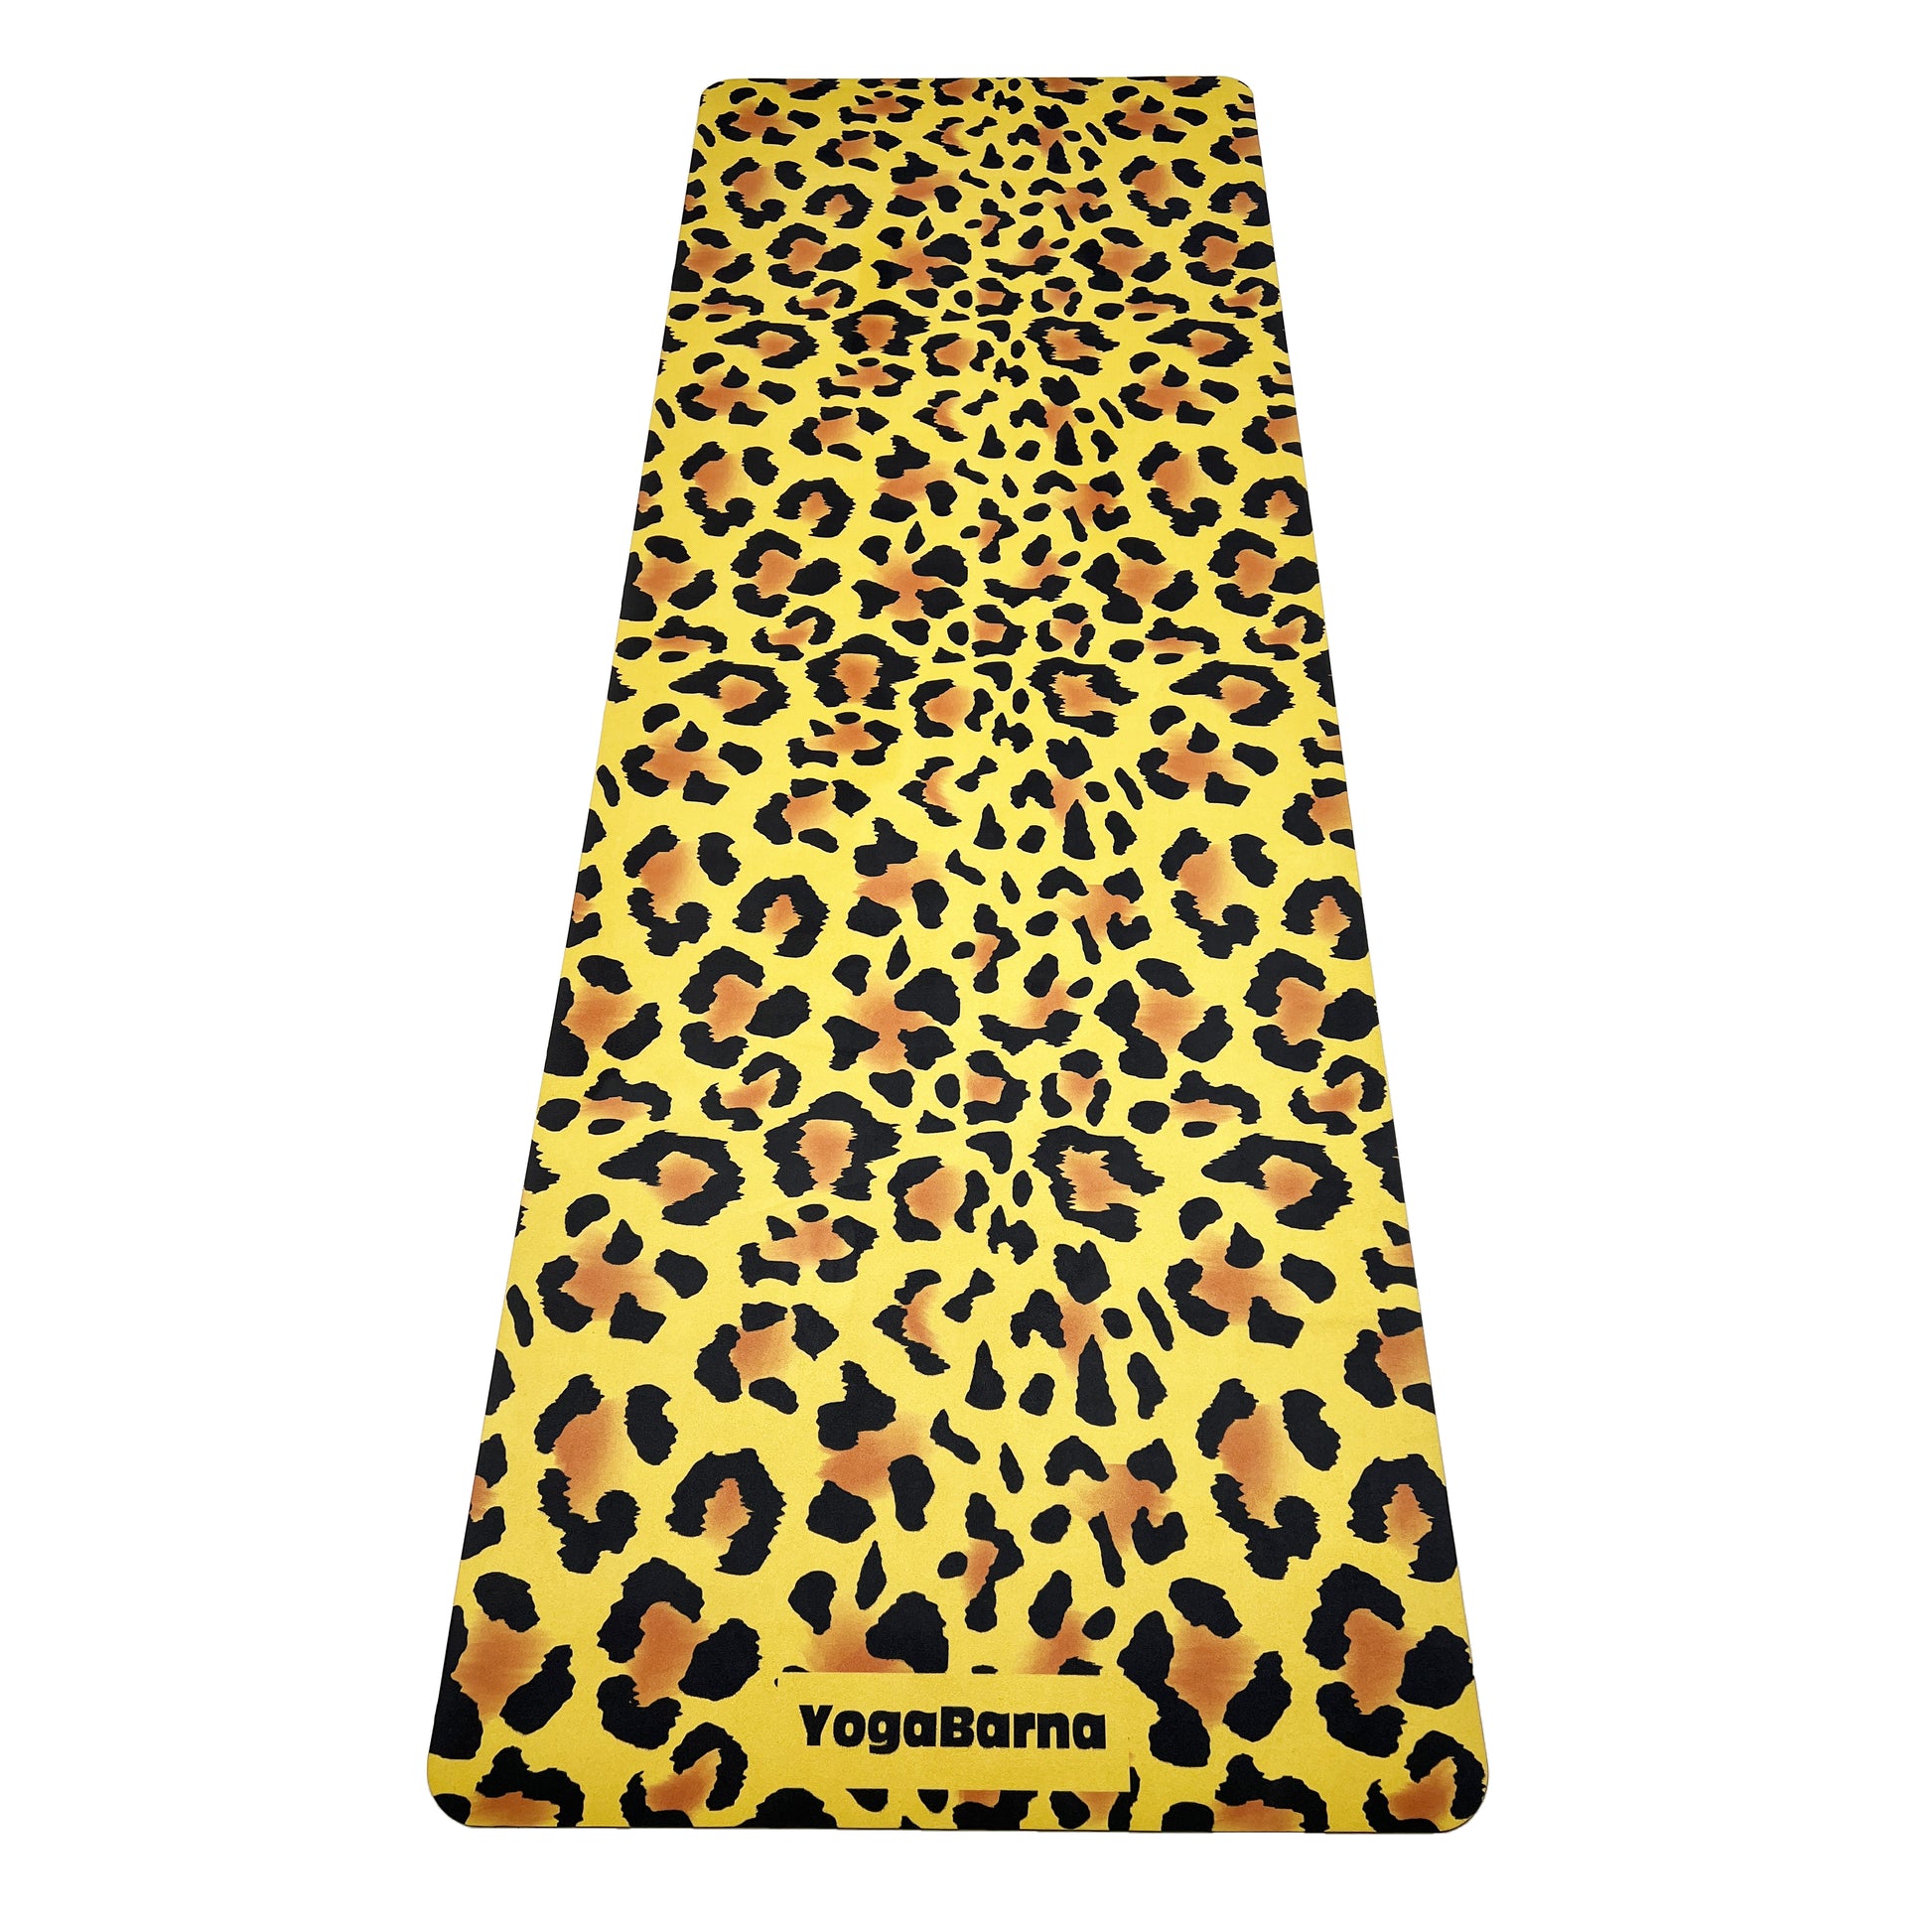 trendy safari fashion leopard spots cheetah print yoga mat